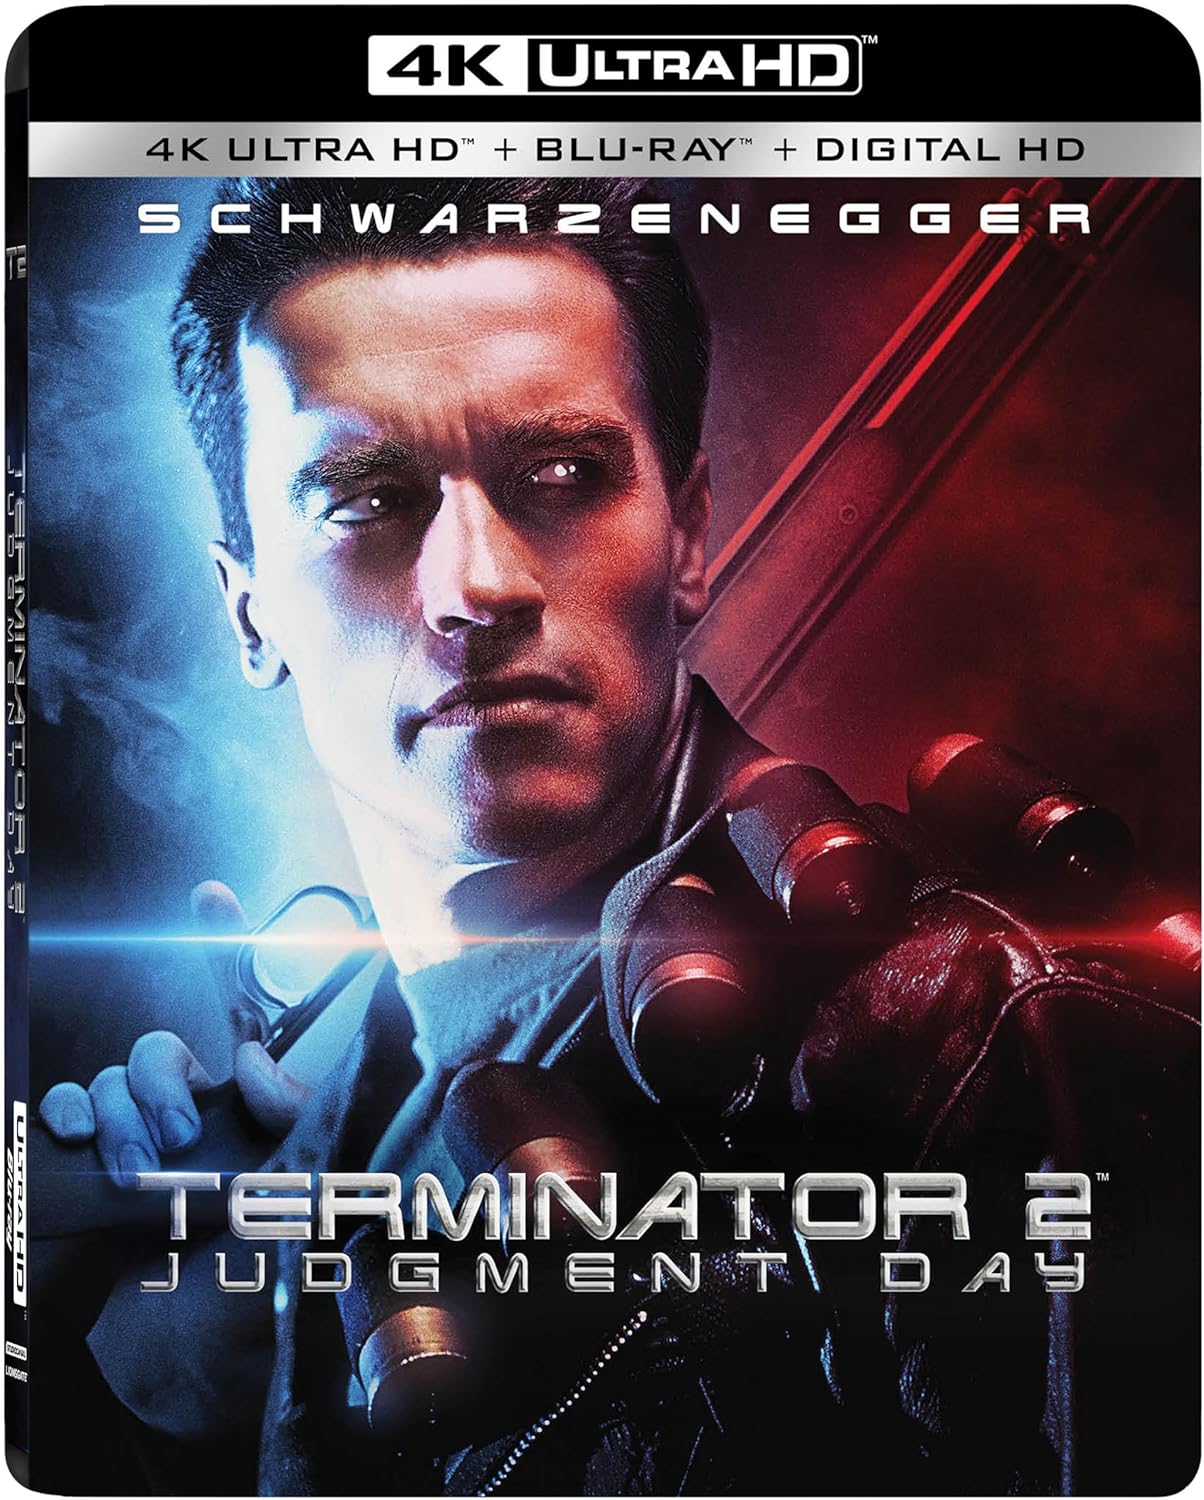 Terminator 2: Judgement Day 4K Ultra Hd [Blu-ray] [4K UHD] $10